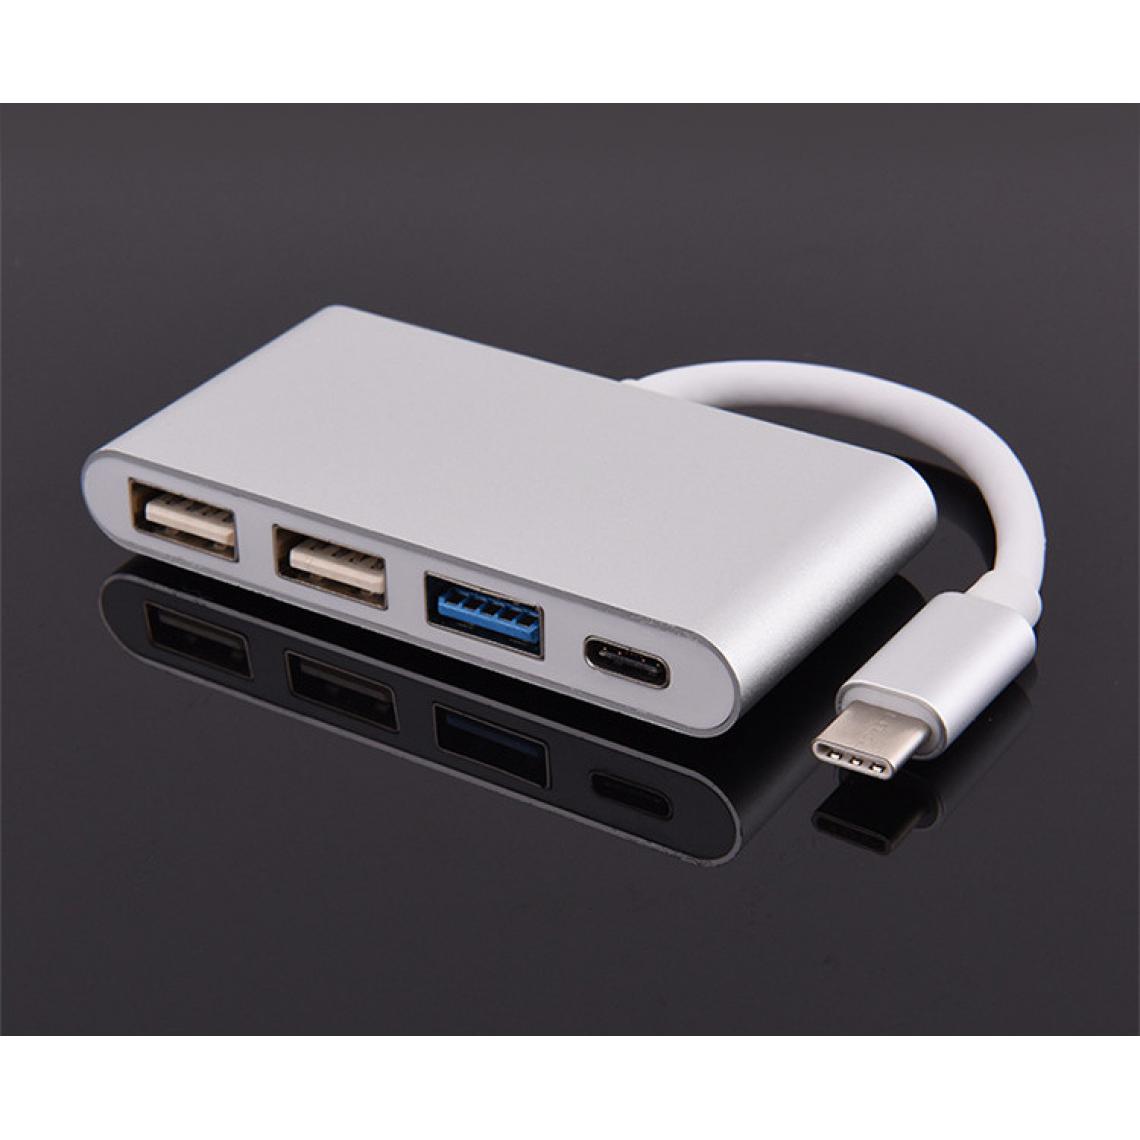 Shot - Multi Adaptateur 4 en 1 Type C pour XIAOMI Mi A2 Smartphone Hub 2 ports USB 2.0 1 Port USB 3.0 (ARGENT) - Hub